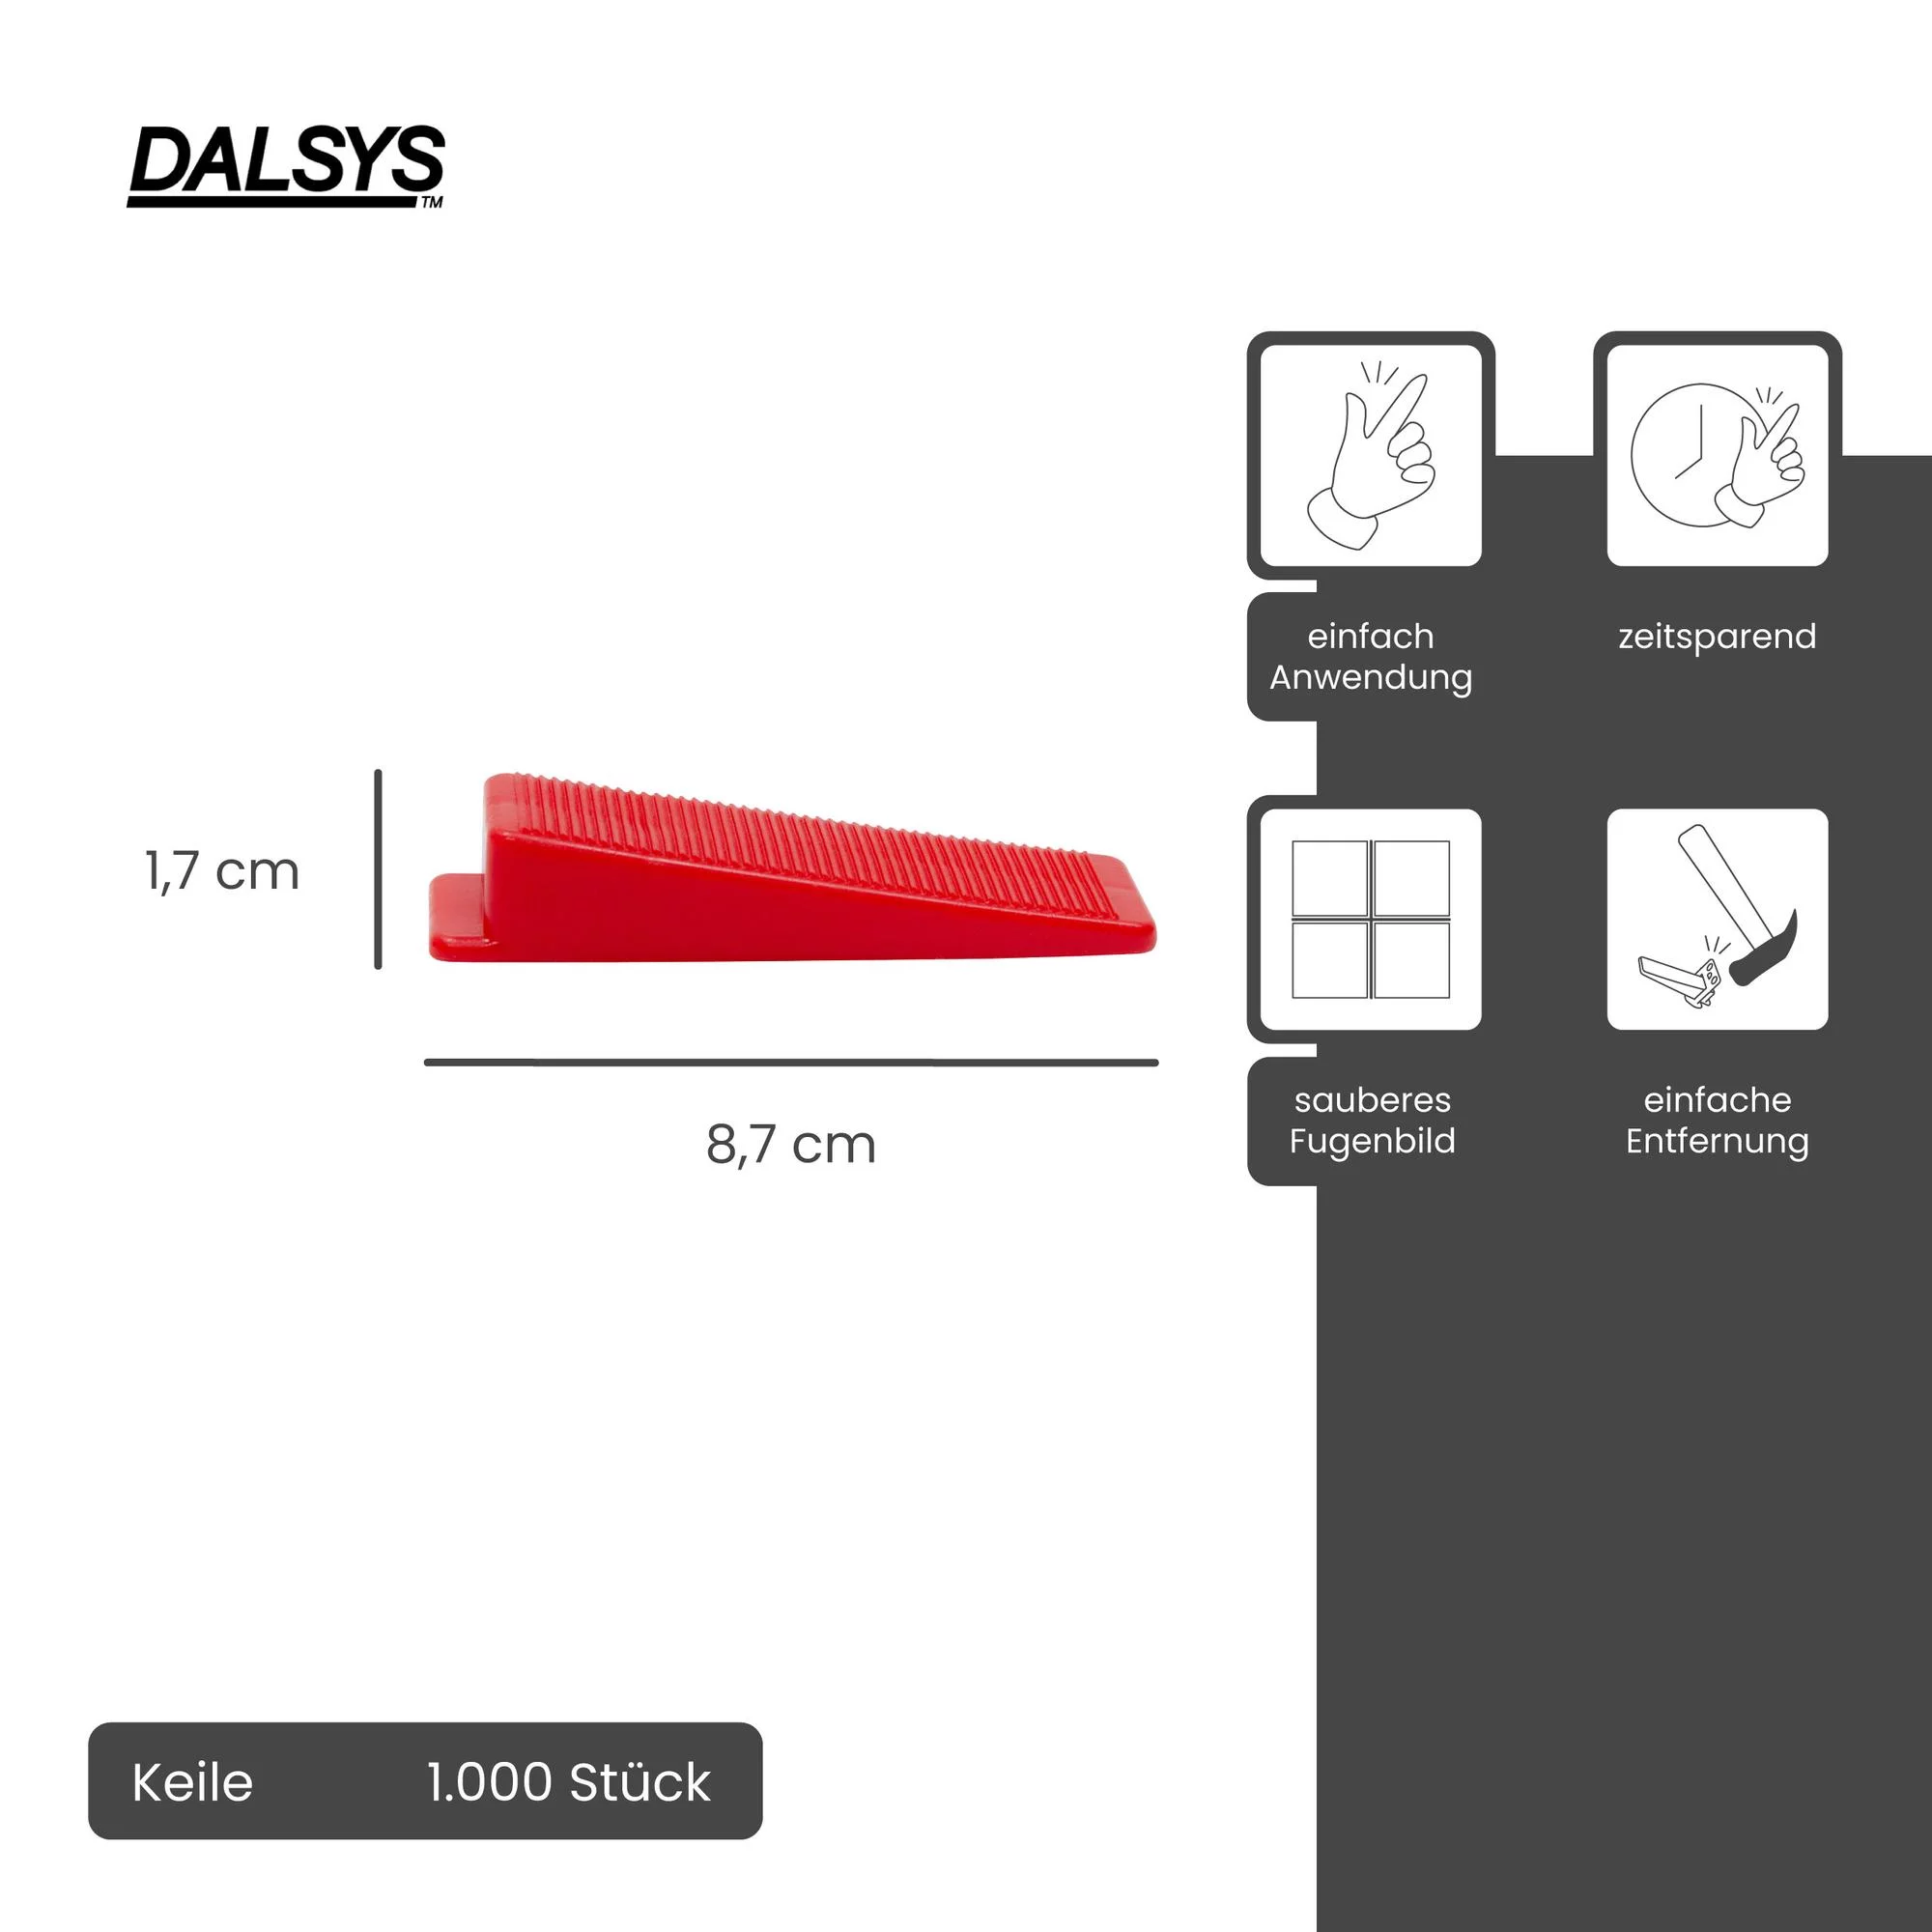 dalsys-fliesen-nivelliersystem--1000-keile-keile